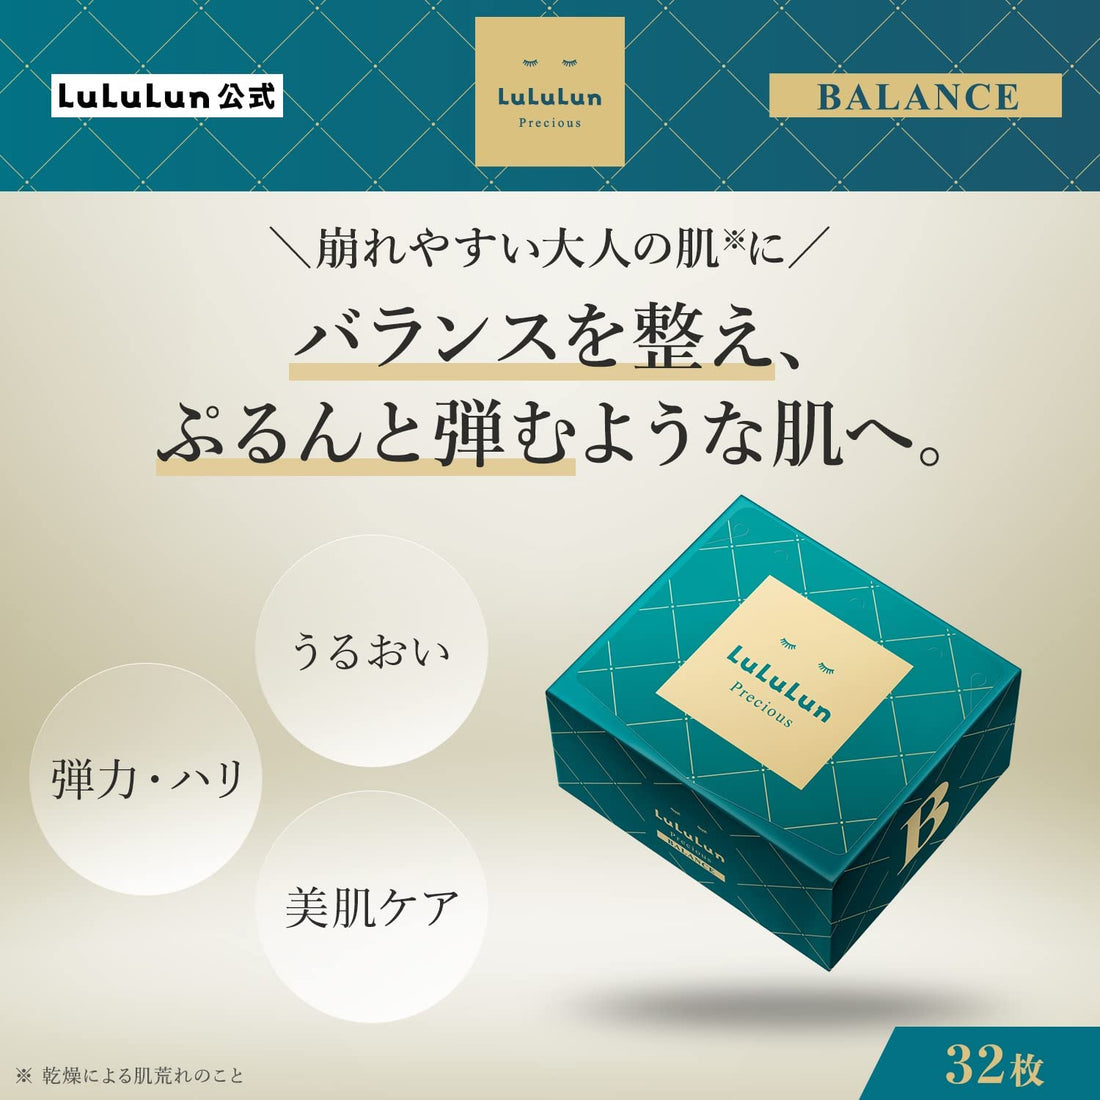 Lululun Precious Face Mask 32pcs Aging Care - Green - Skin maintenance type - NihonMura